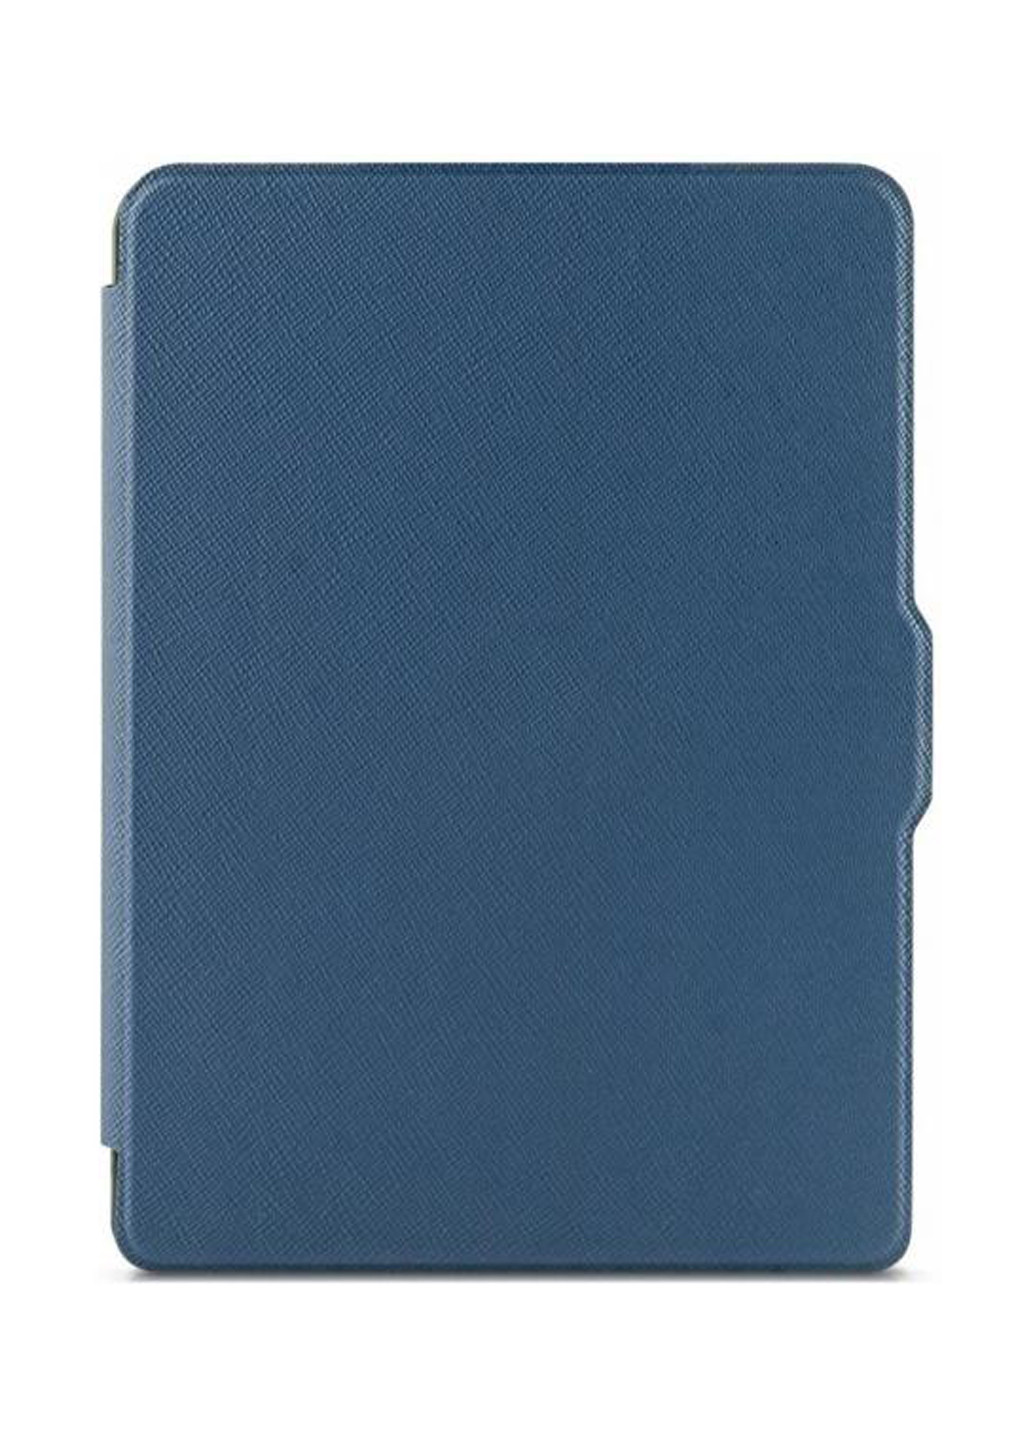 Чохол Premium для AIRBOOK City Base / LED blue (4821784622006) Airon premium для электронной книги airbook city base/led blue (4821784622006) (158554742)